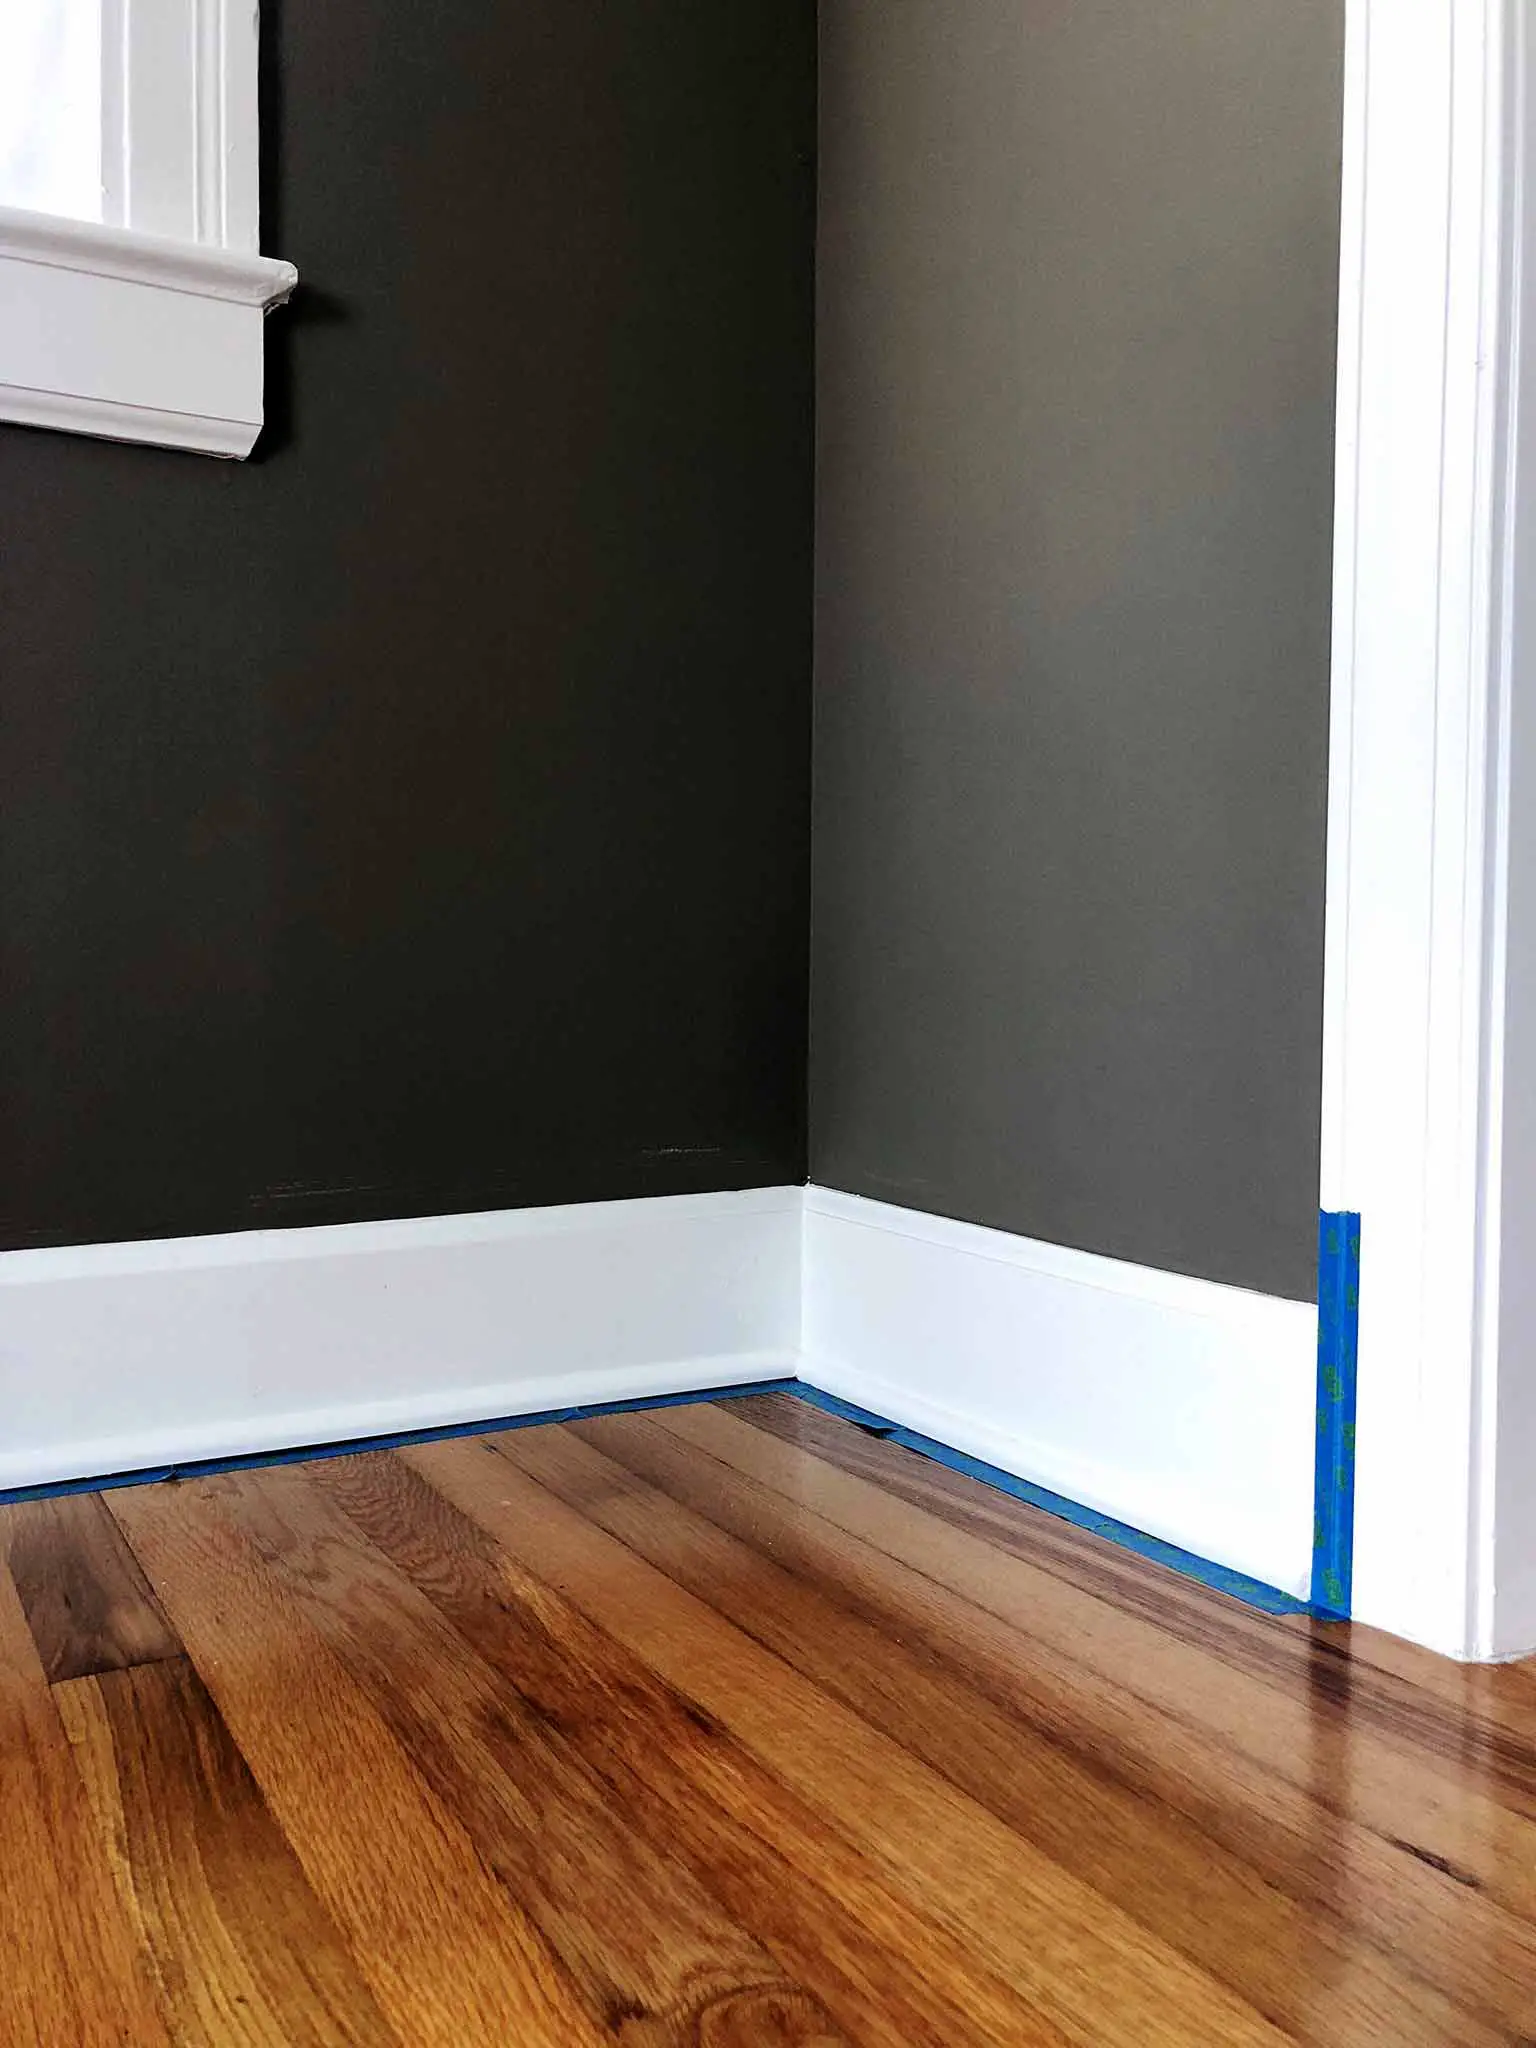 Master Bedroom Progress Painting Baseboards - The One Room Challenge - That Homebird Life Blog